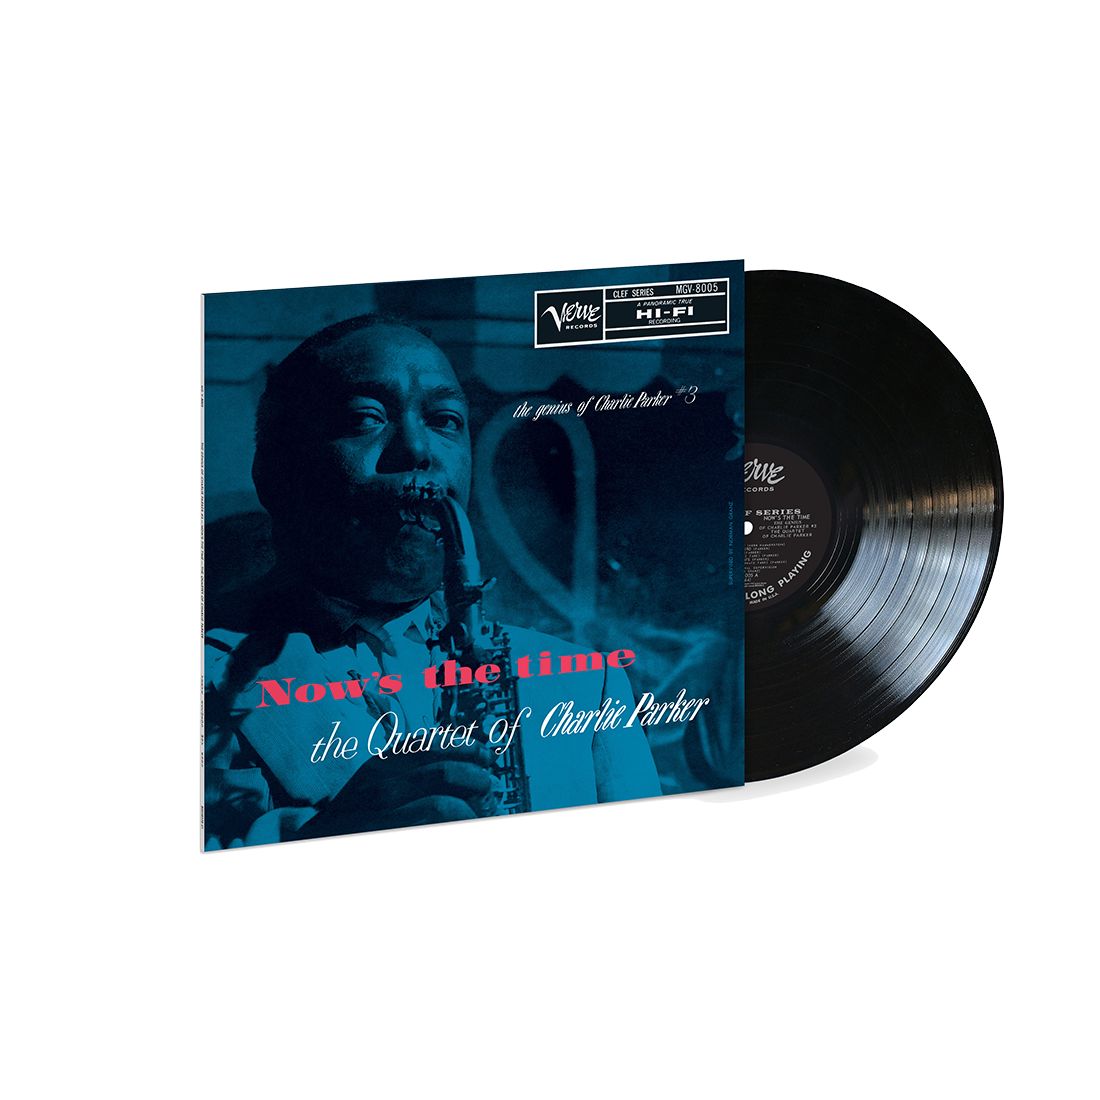 Charlie Parker - Now’s The Time: The Genius of Charlie Parker (Verve By Request): Vinyl LP